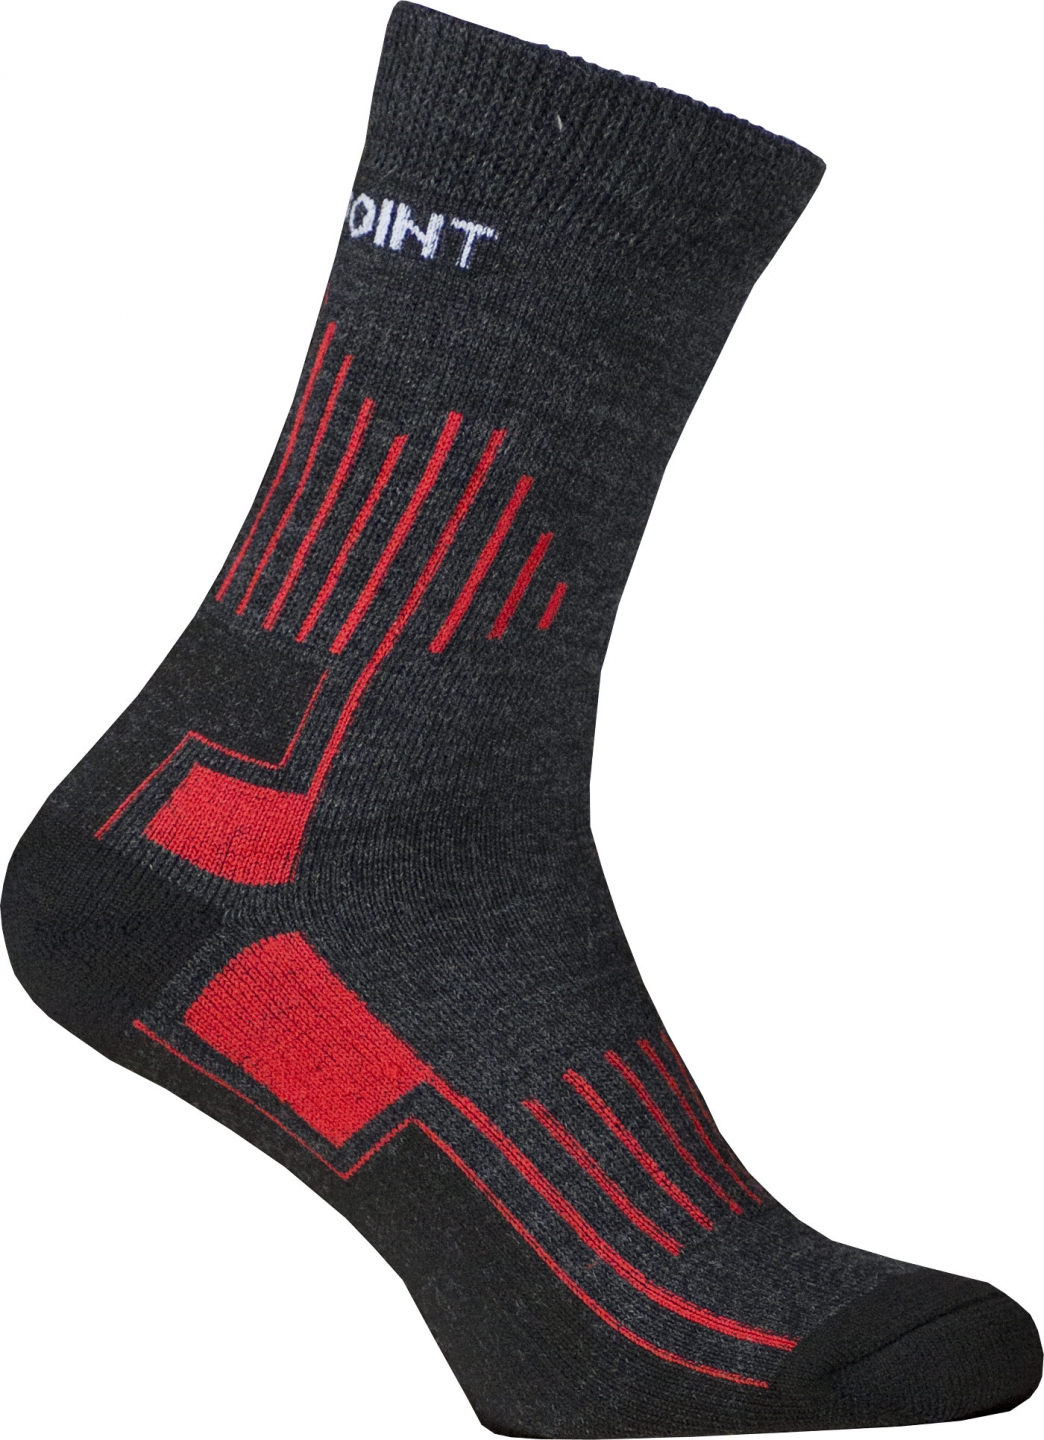 Ponožky High Point Lord 2.0 Merino Velikost: 39-42